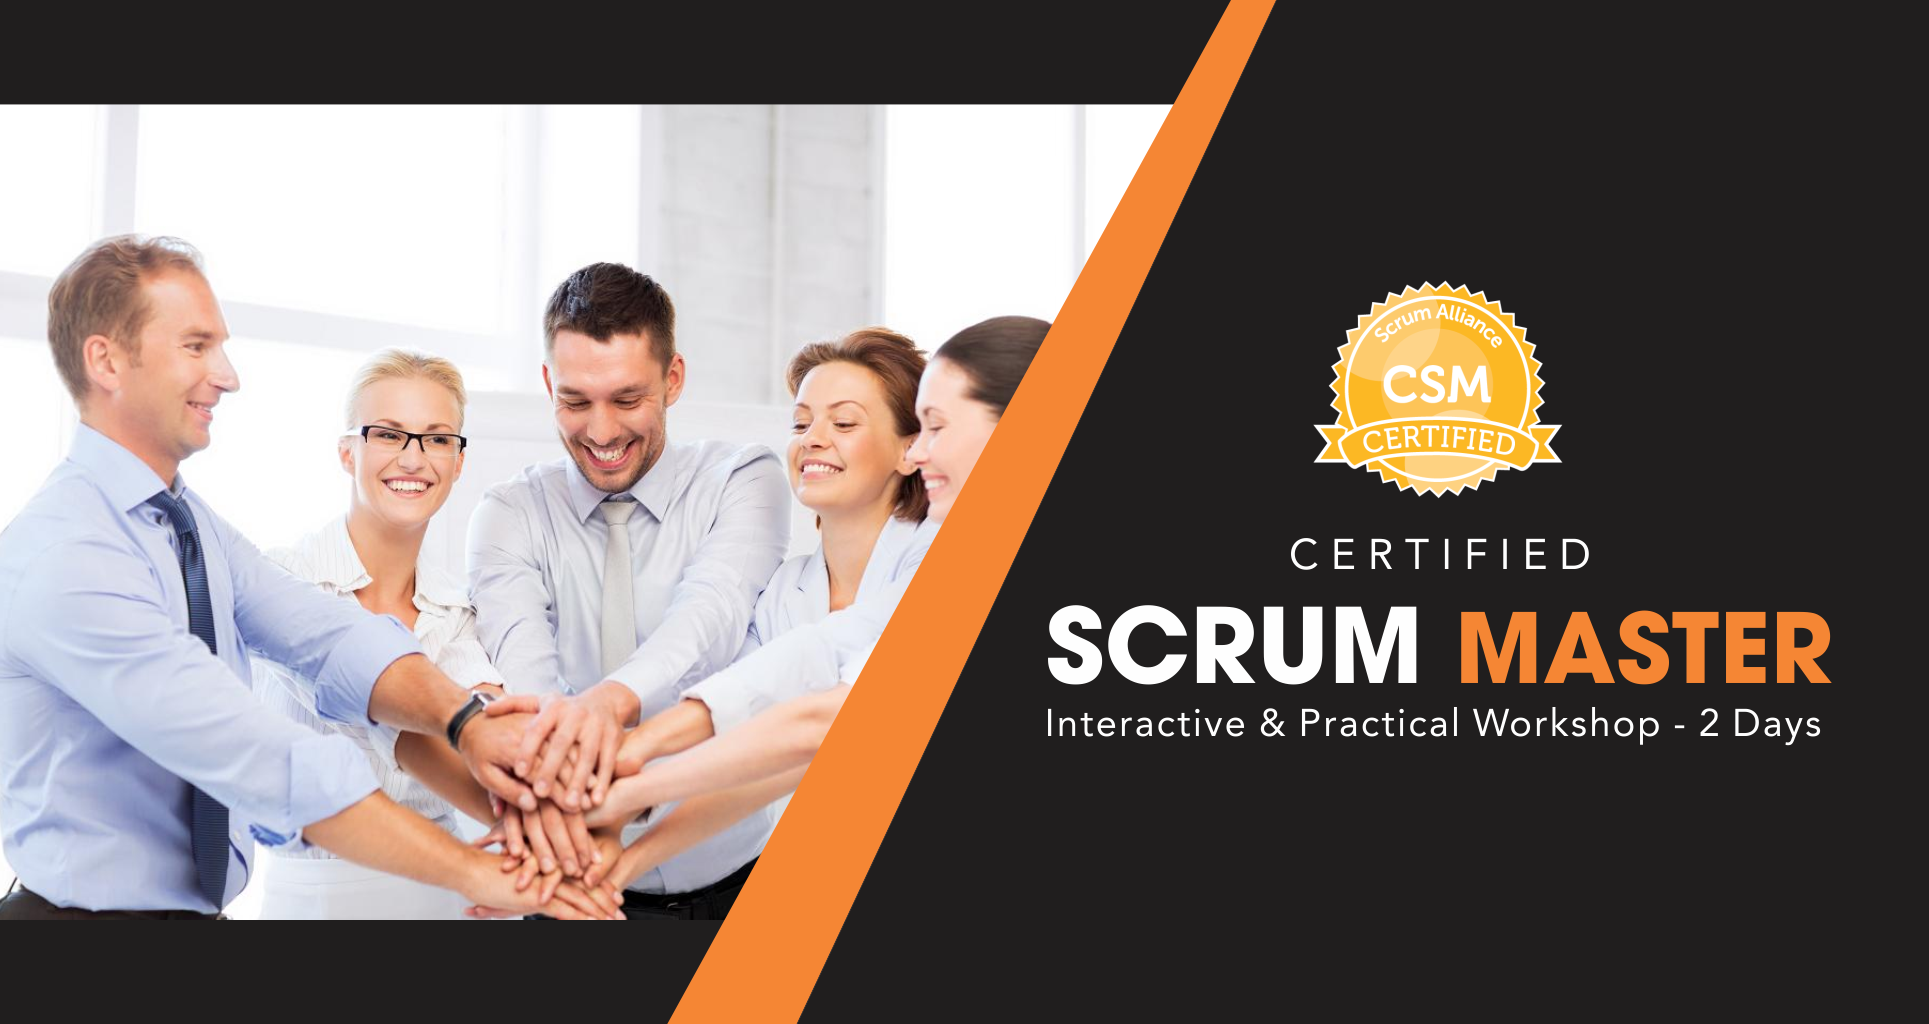 CSM (Certified Scrum Master) certification Training In Atlanta, GA